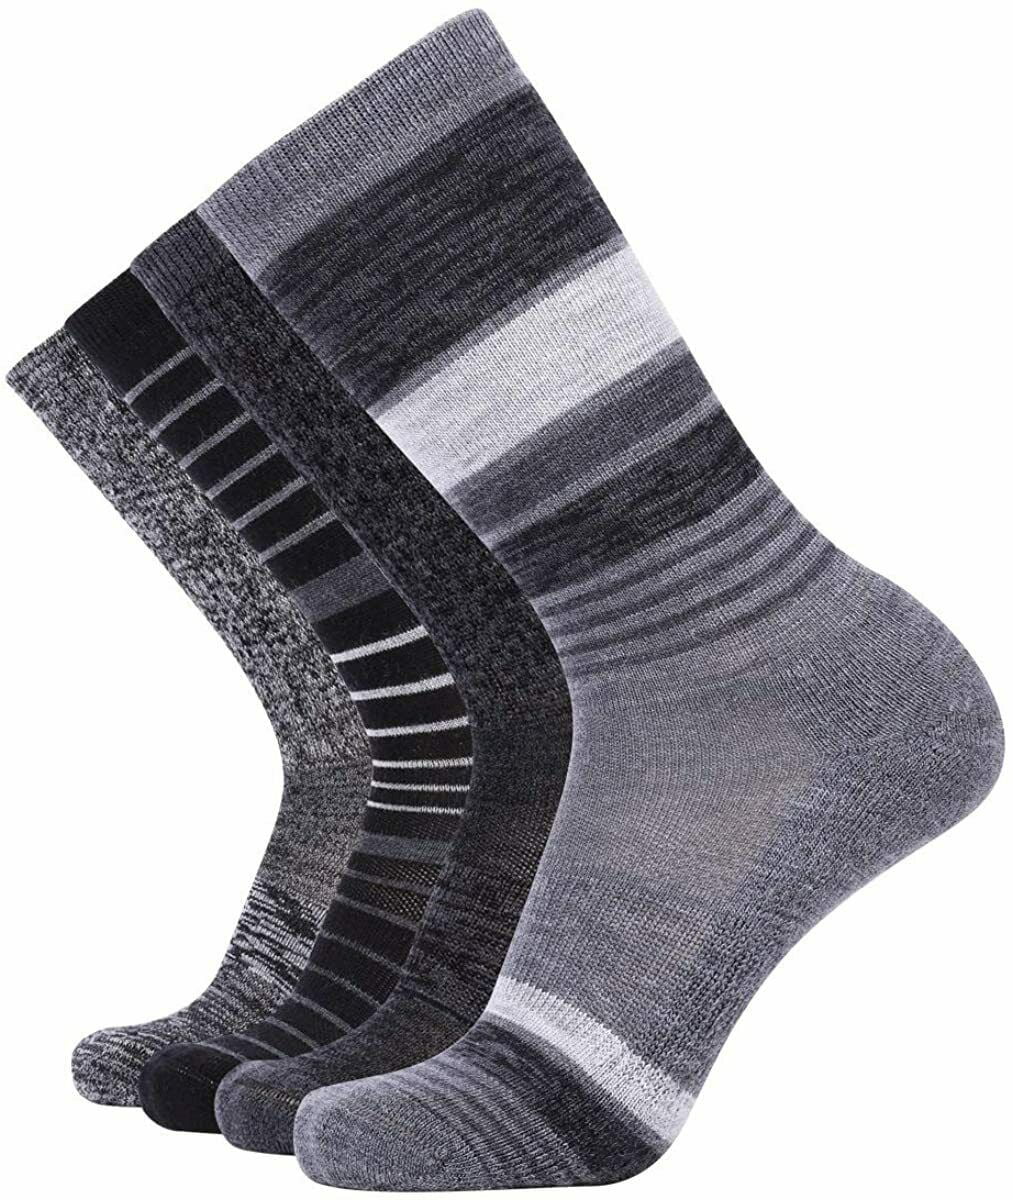 FITS Womens Light Hiker Socks Small Merino Wool Blend Made In The USA 